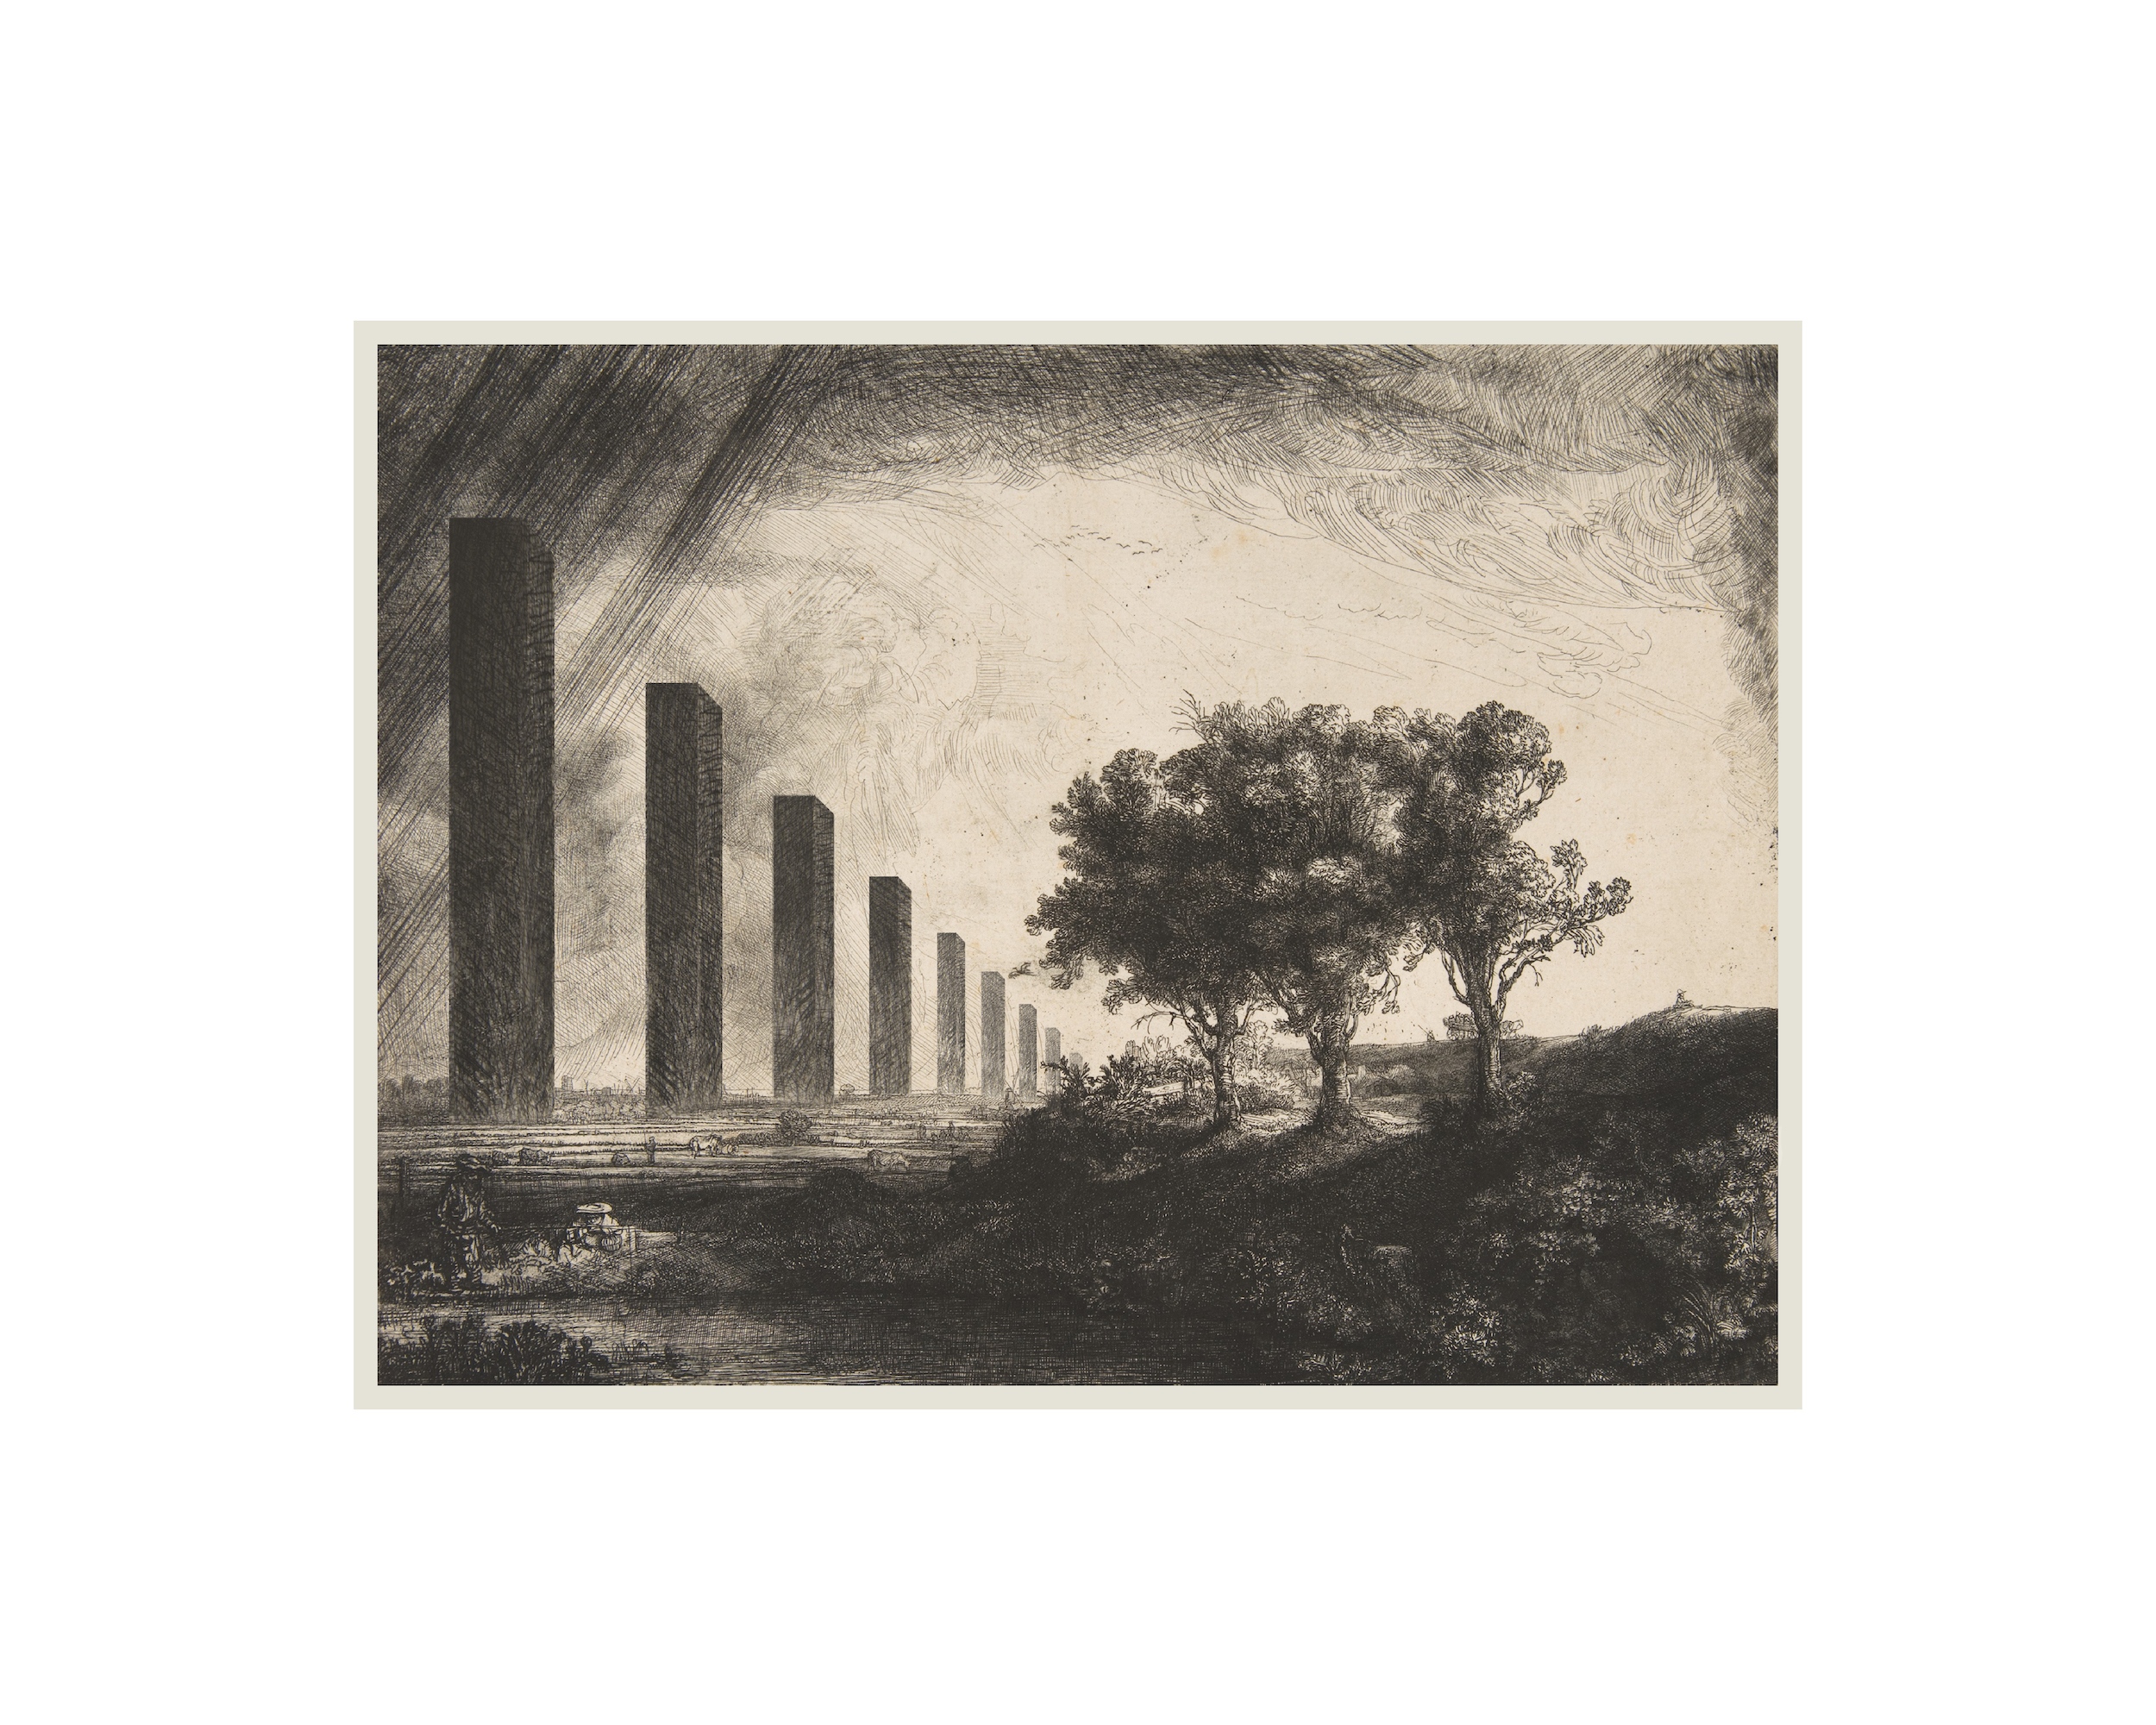 # 1: digitális technika, print; (20x30cm), 2021, e.k.: Rembrant van Rijn - The tree trees (1643